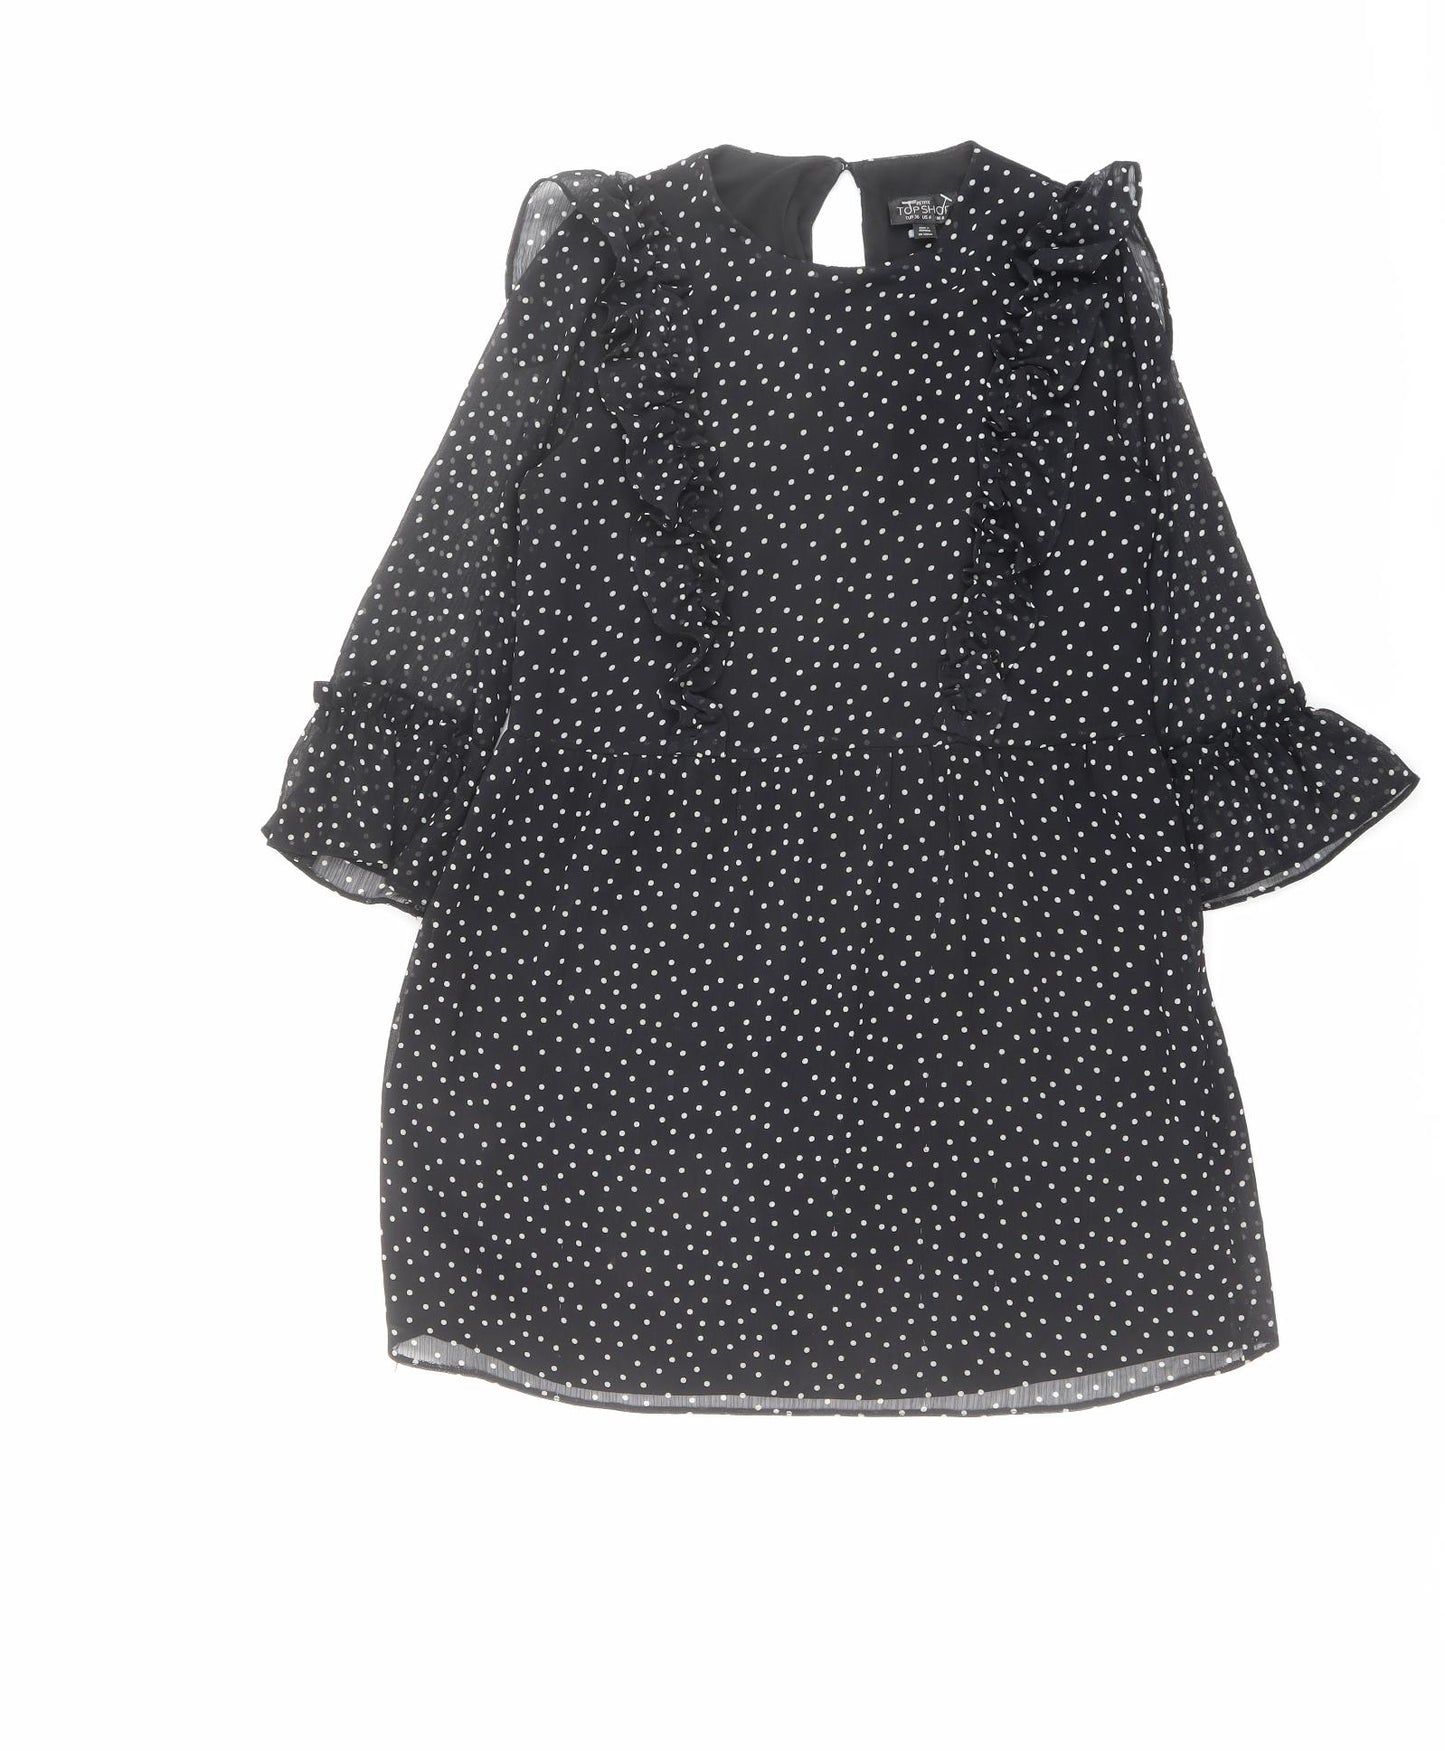 Topshop Womens Black Polka Dot Polyester A-Line Size 8 Round Neck Button